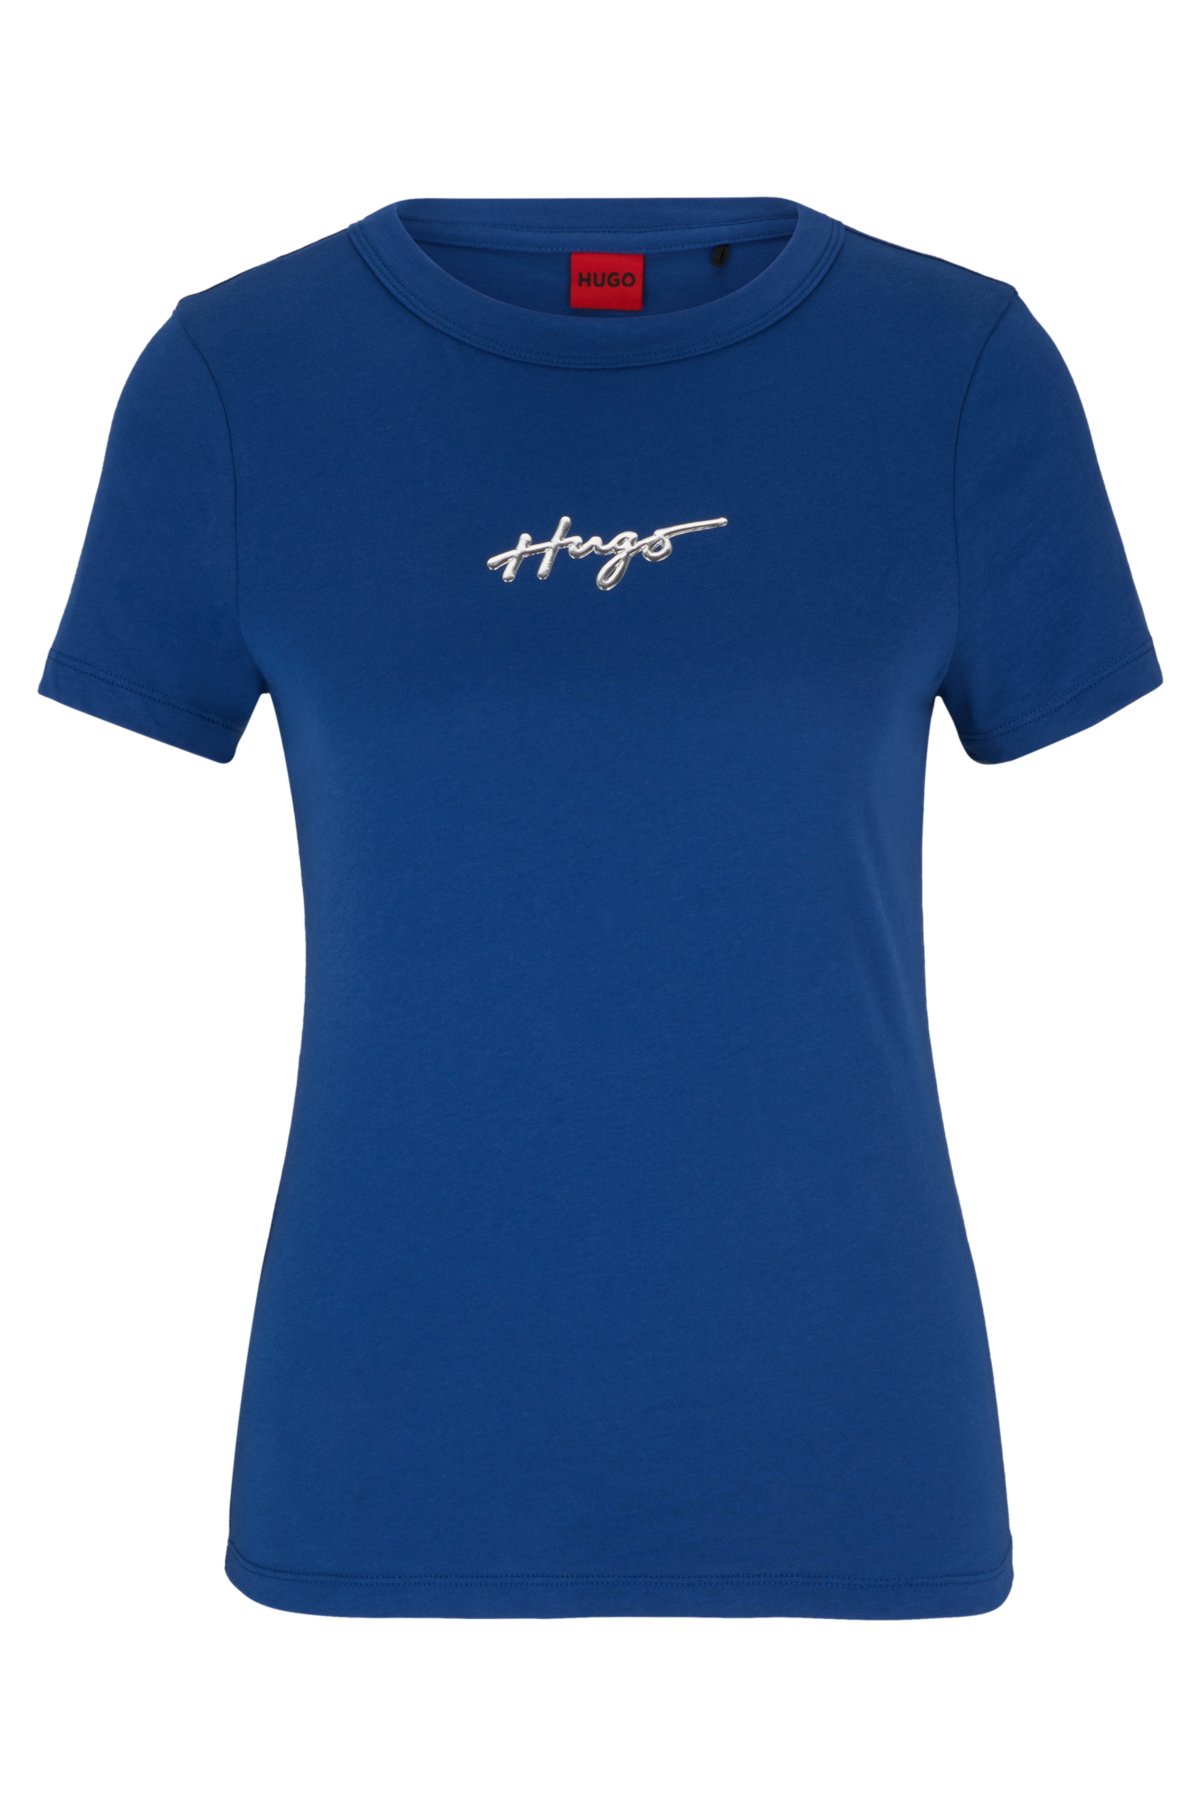 HUGO - Cotton-jersey T-shirt with metallic-effect handwritten logo